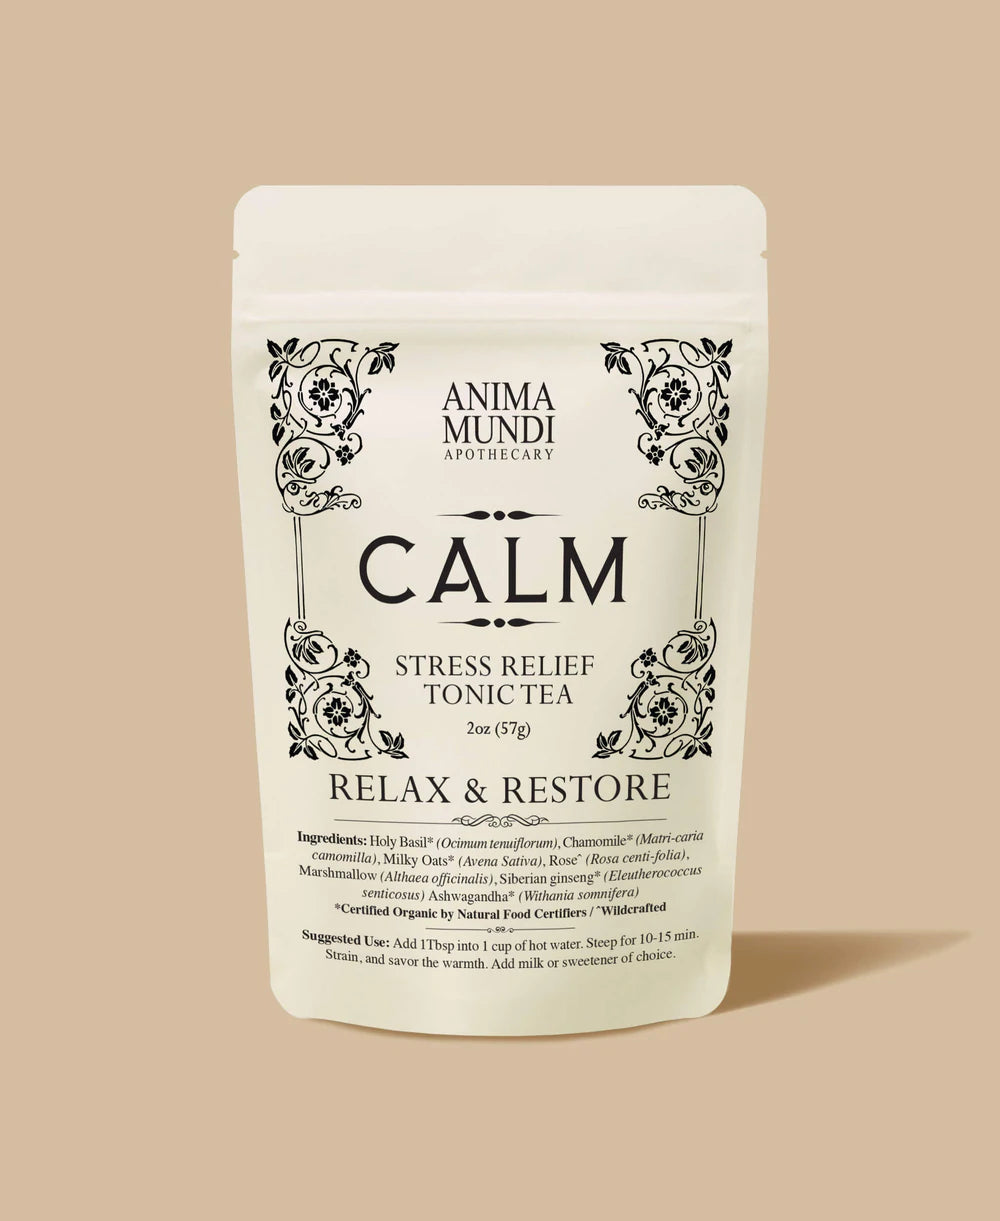 CALM TEA: Stress Relief Tonic Tea